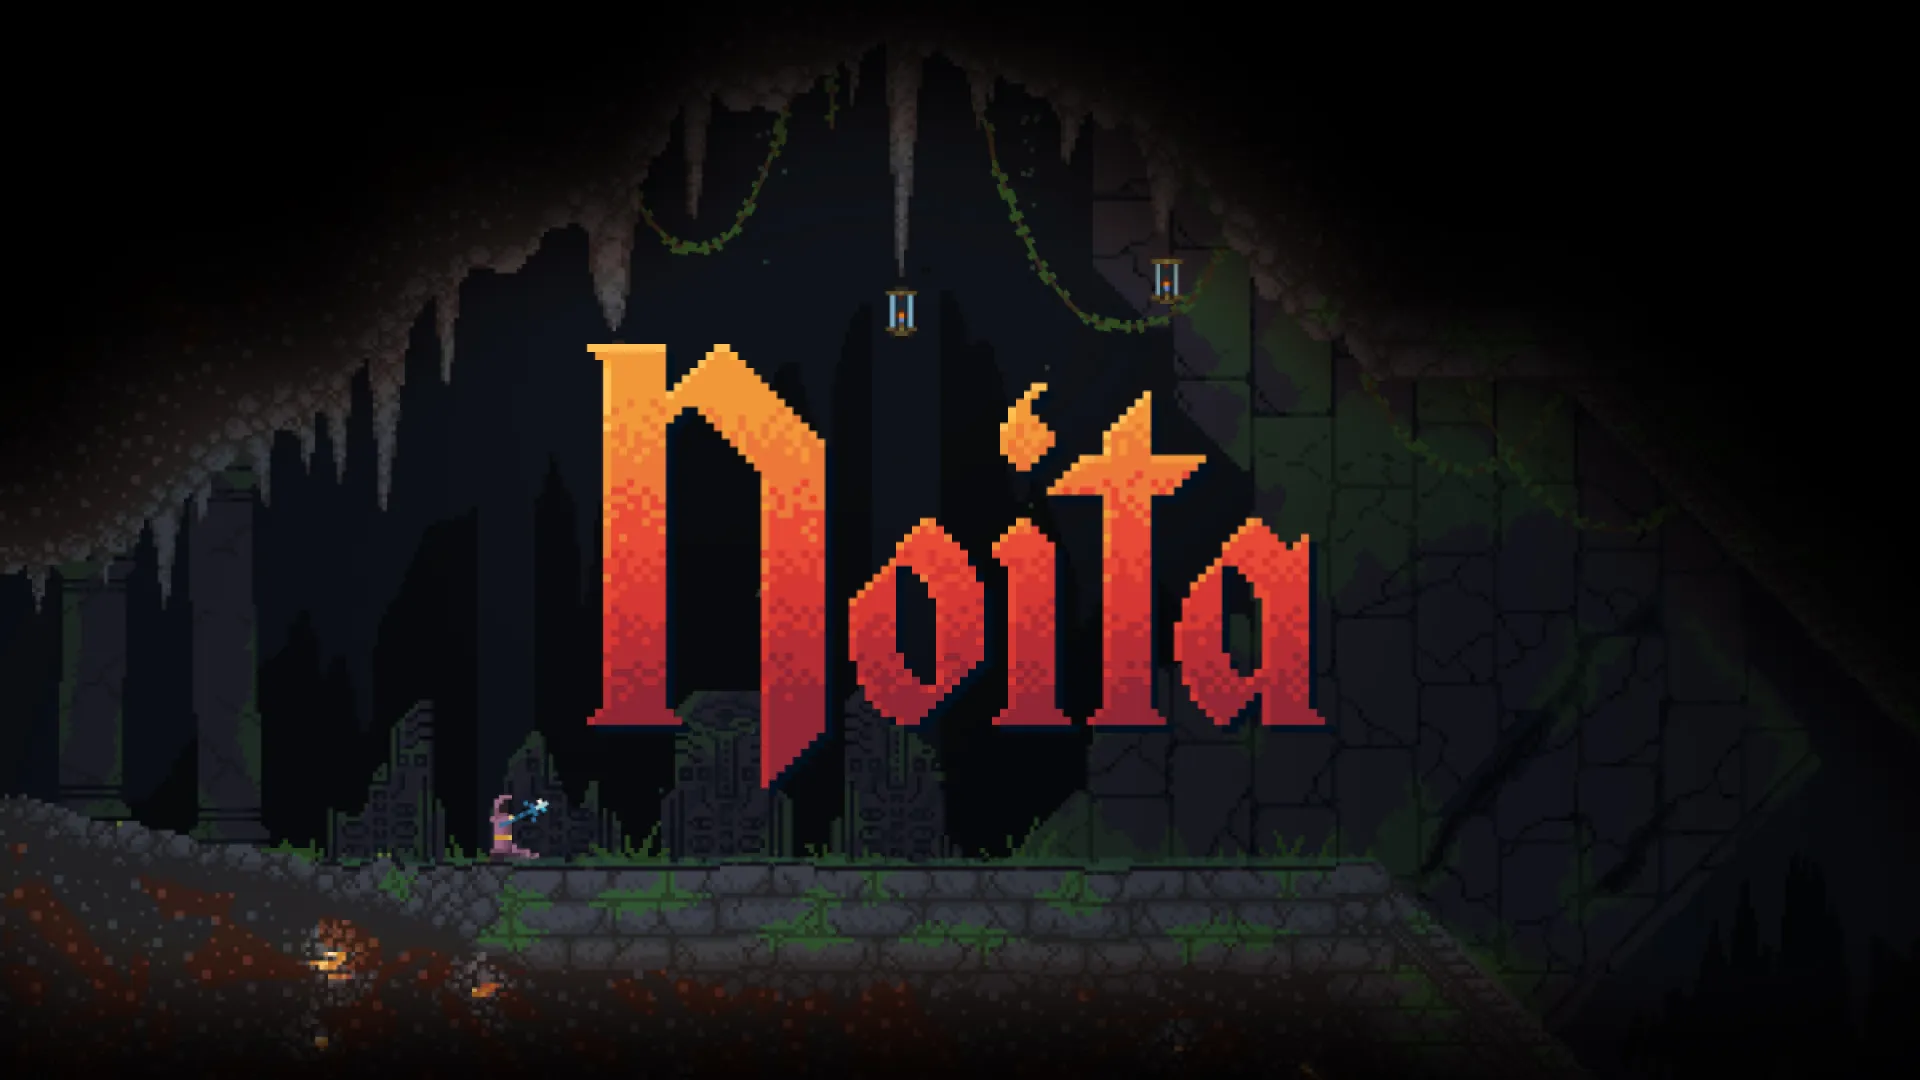 Noita's logo and artwork